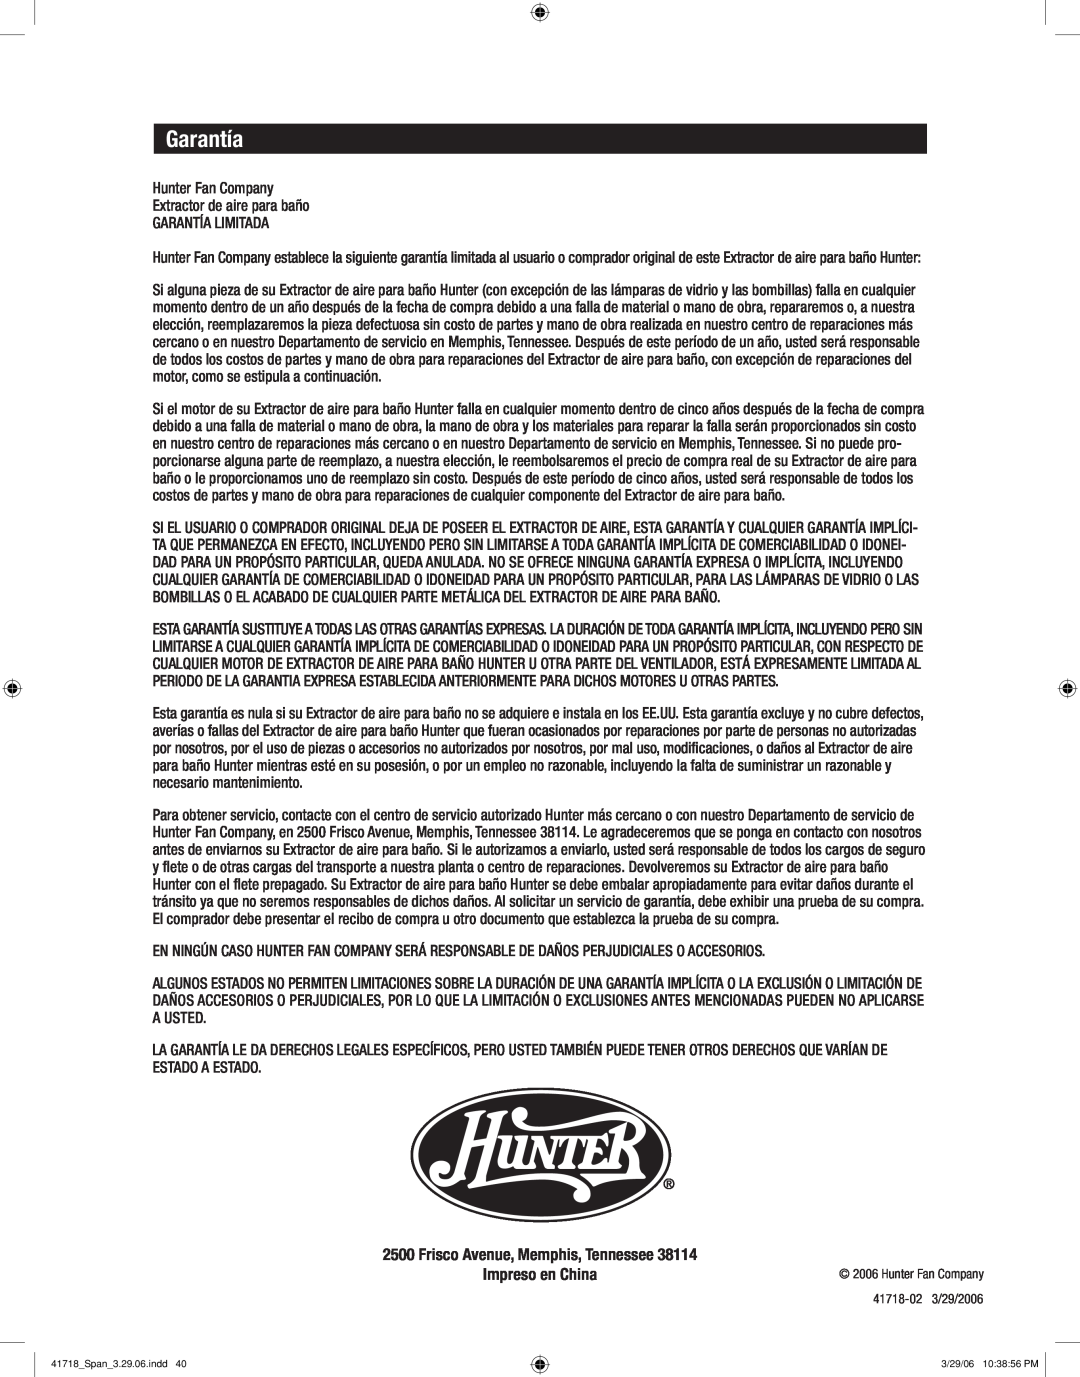 Hunter Fan 90058, 90052, 90053, 90054 manual Garantía, Frisco Avenue, Memphis, Tennessee Impreso en China 